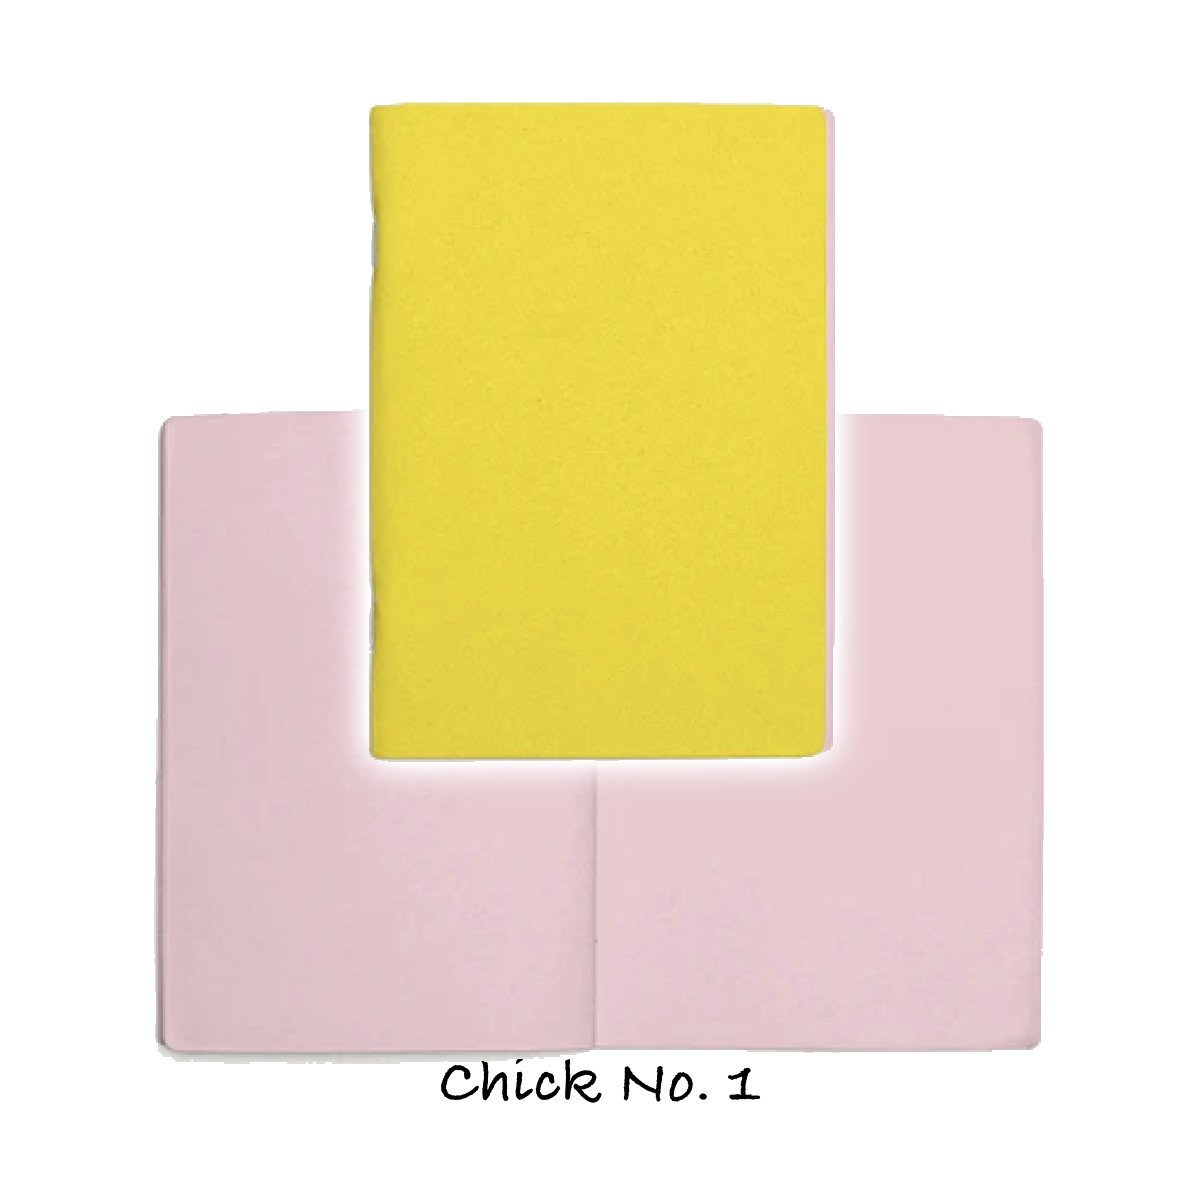 Uglybooks - Chick No. 1 - Single Notebook - Notegeist